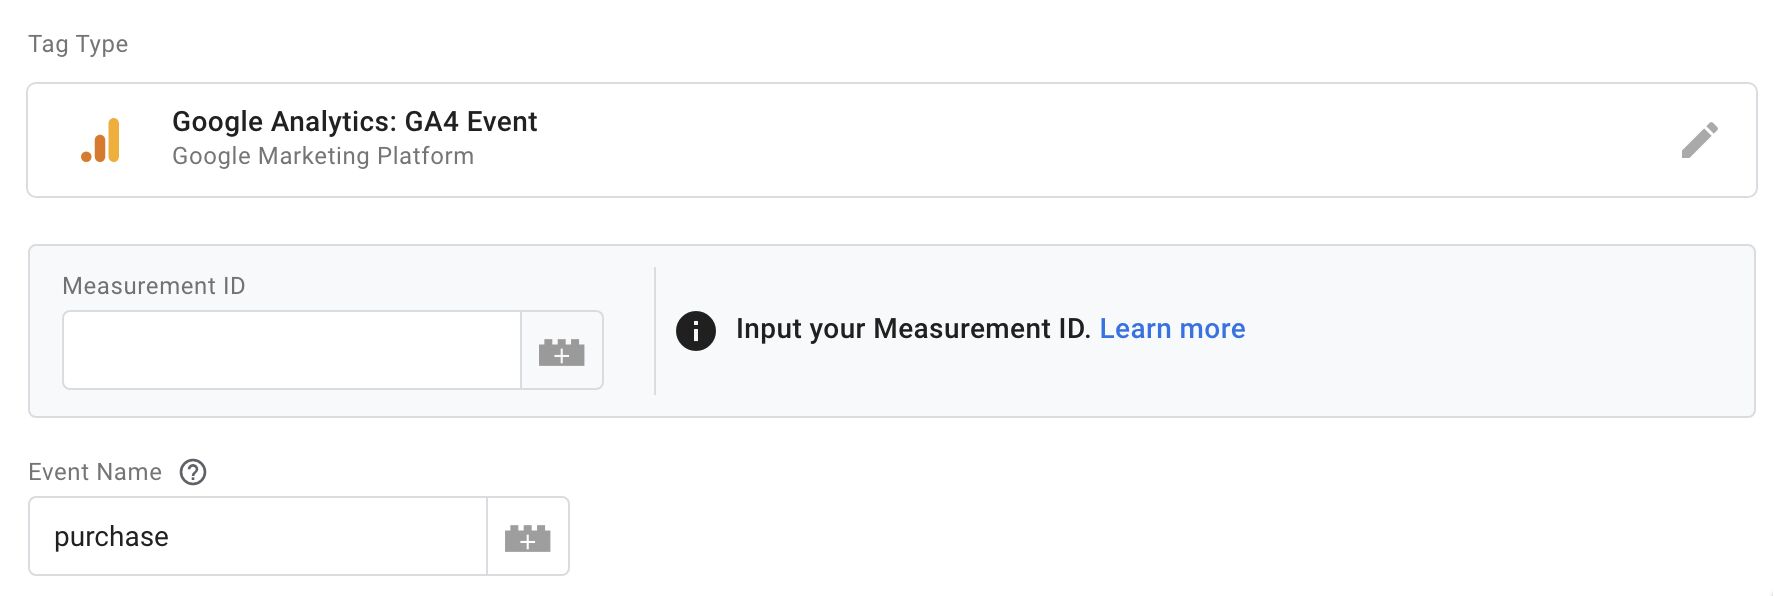 measurement-id-input.jpg